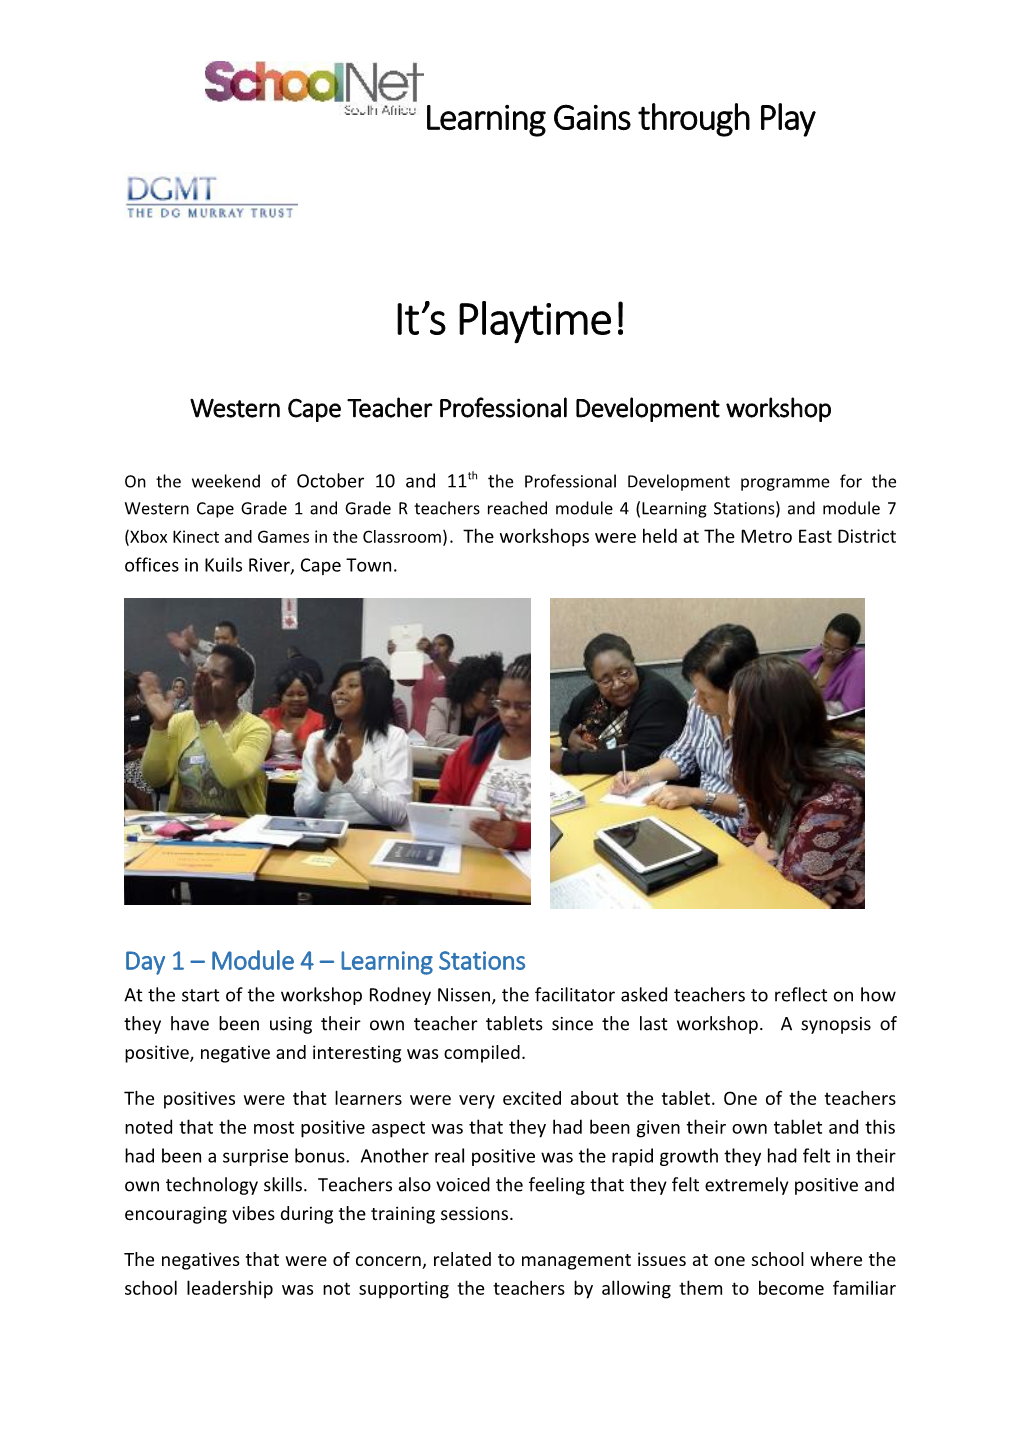 Western Cape Teacher Professional Development Workshop